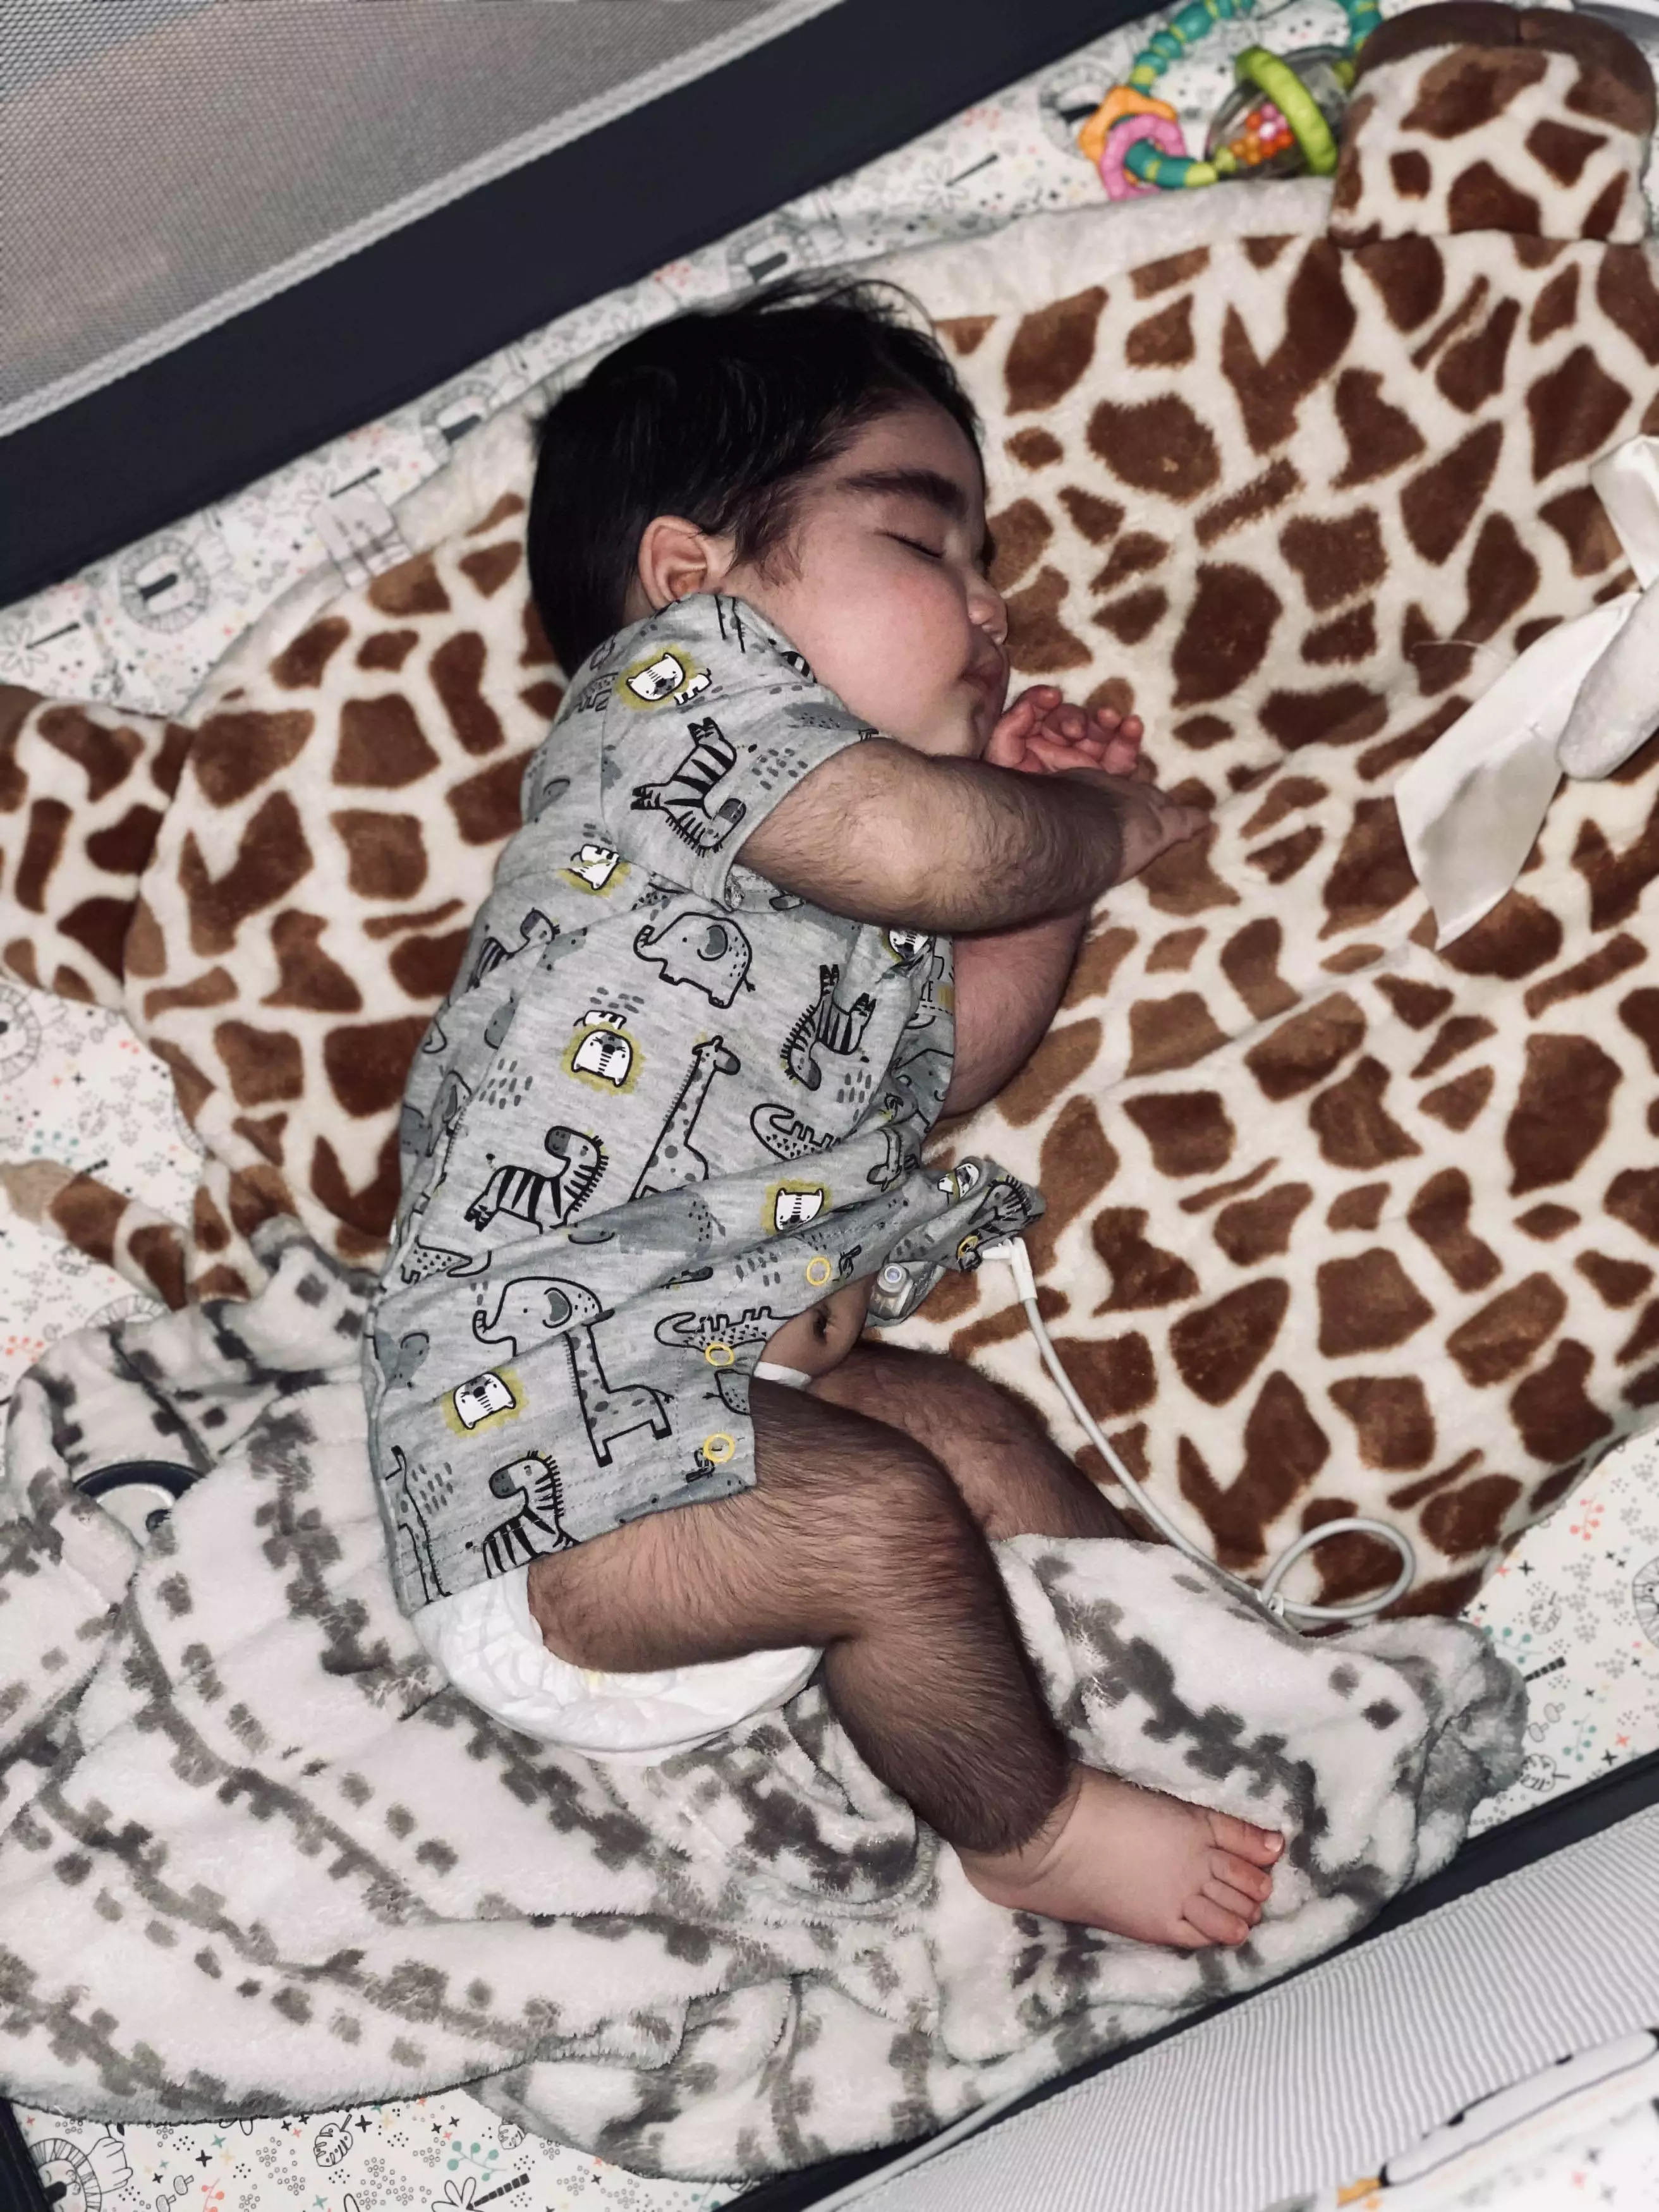 Baby Mateo Hernandez has a rare condition Congenital Hyperinsulinism (